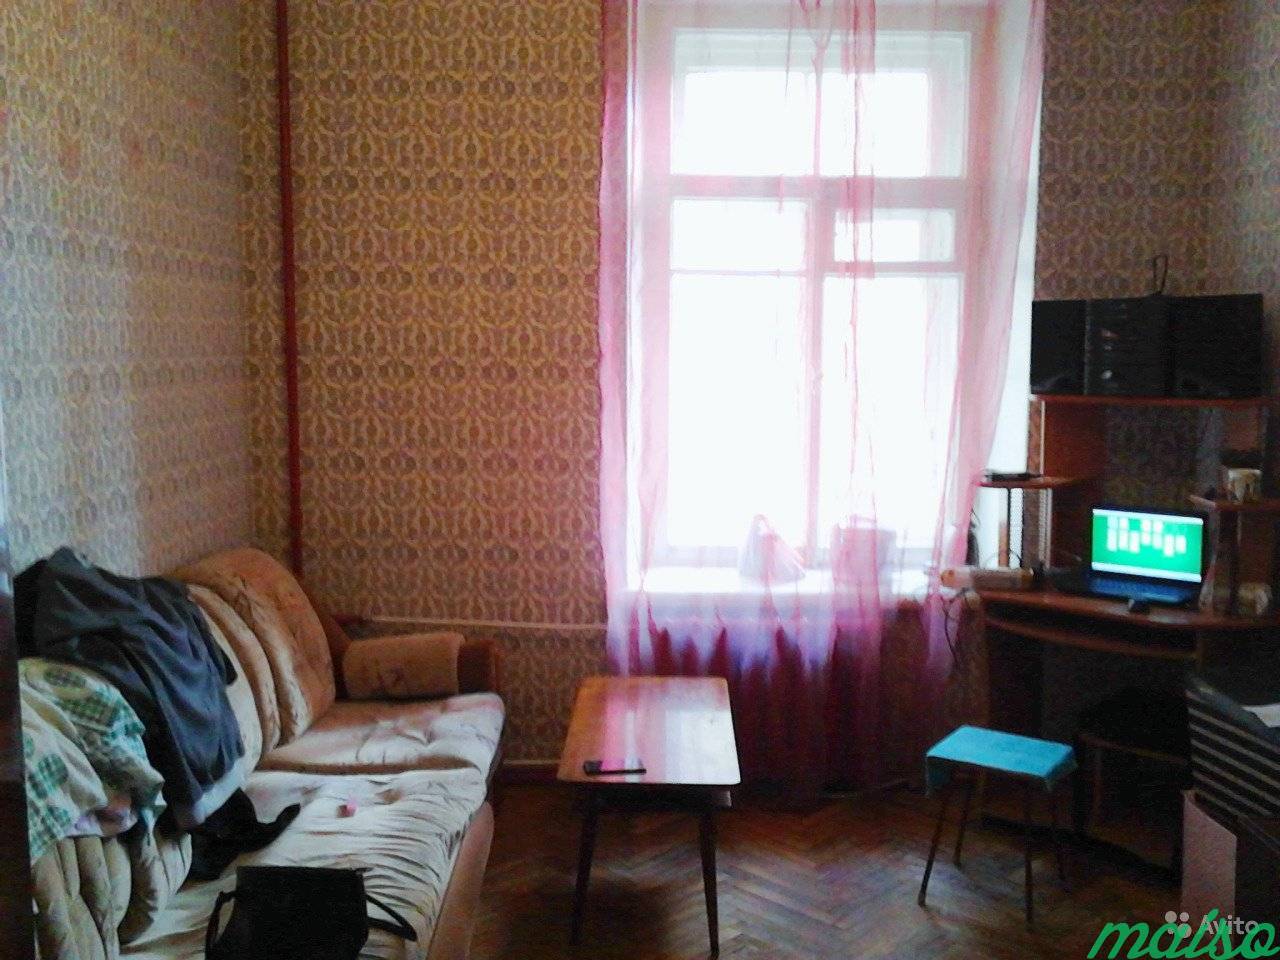 Комната 24 м² в 4-к, 3/6 эт. в Санкт-Петербурге. Фото 3